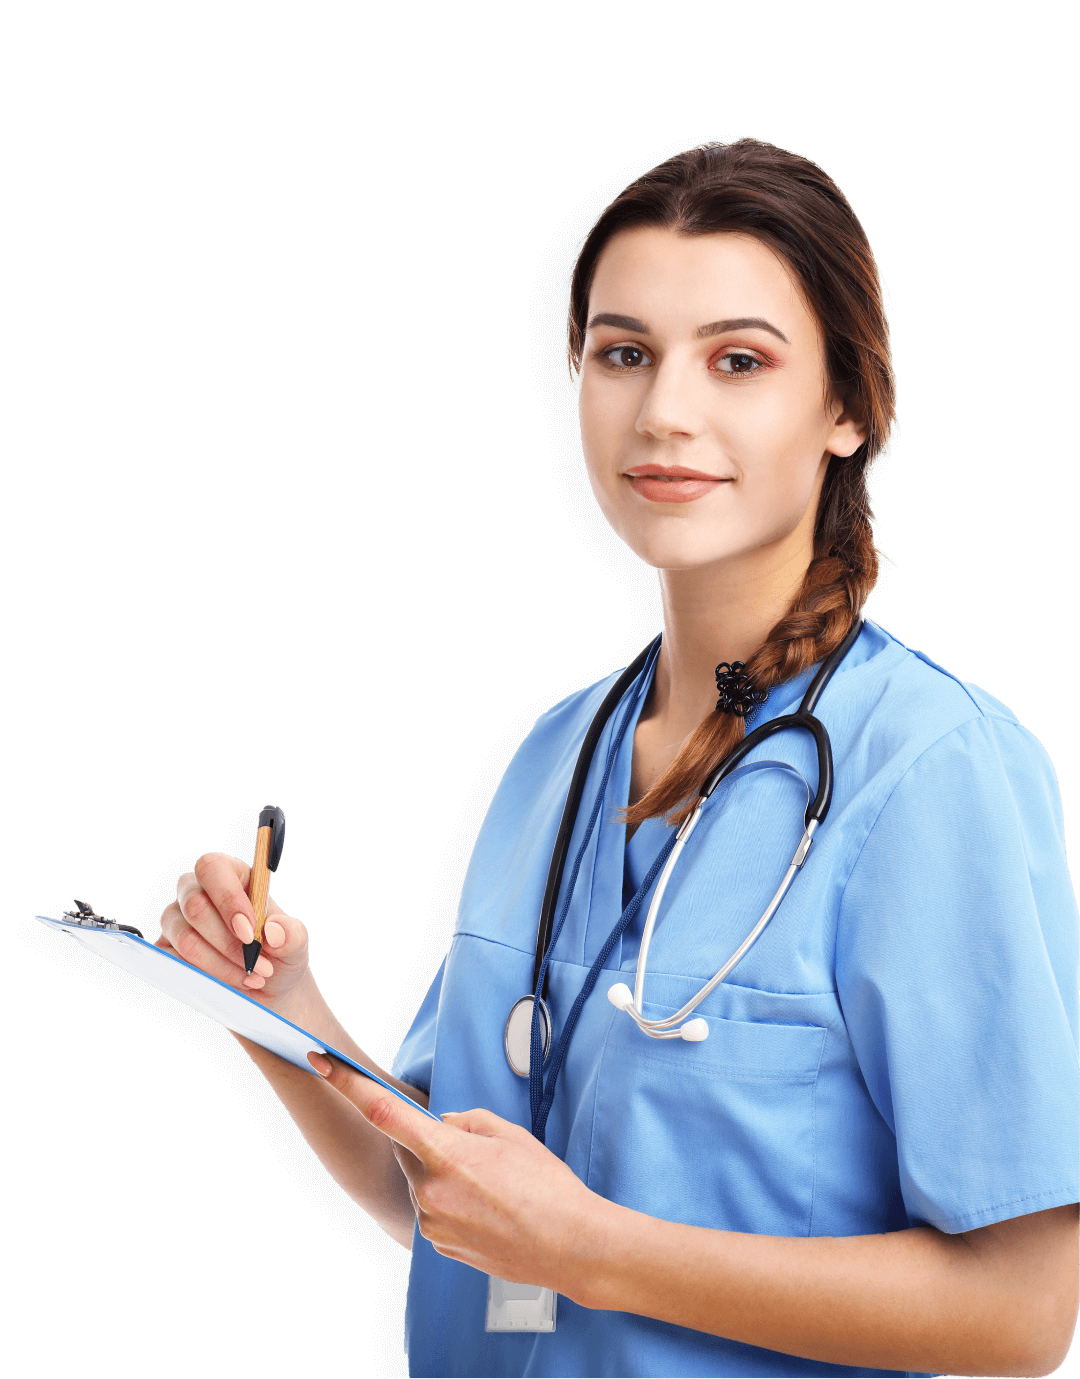 Nurse-Urologic Registered professional